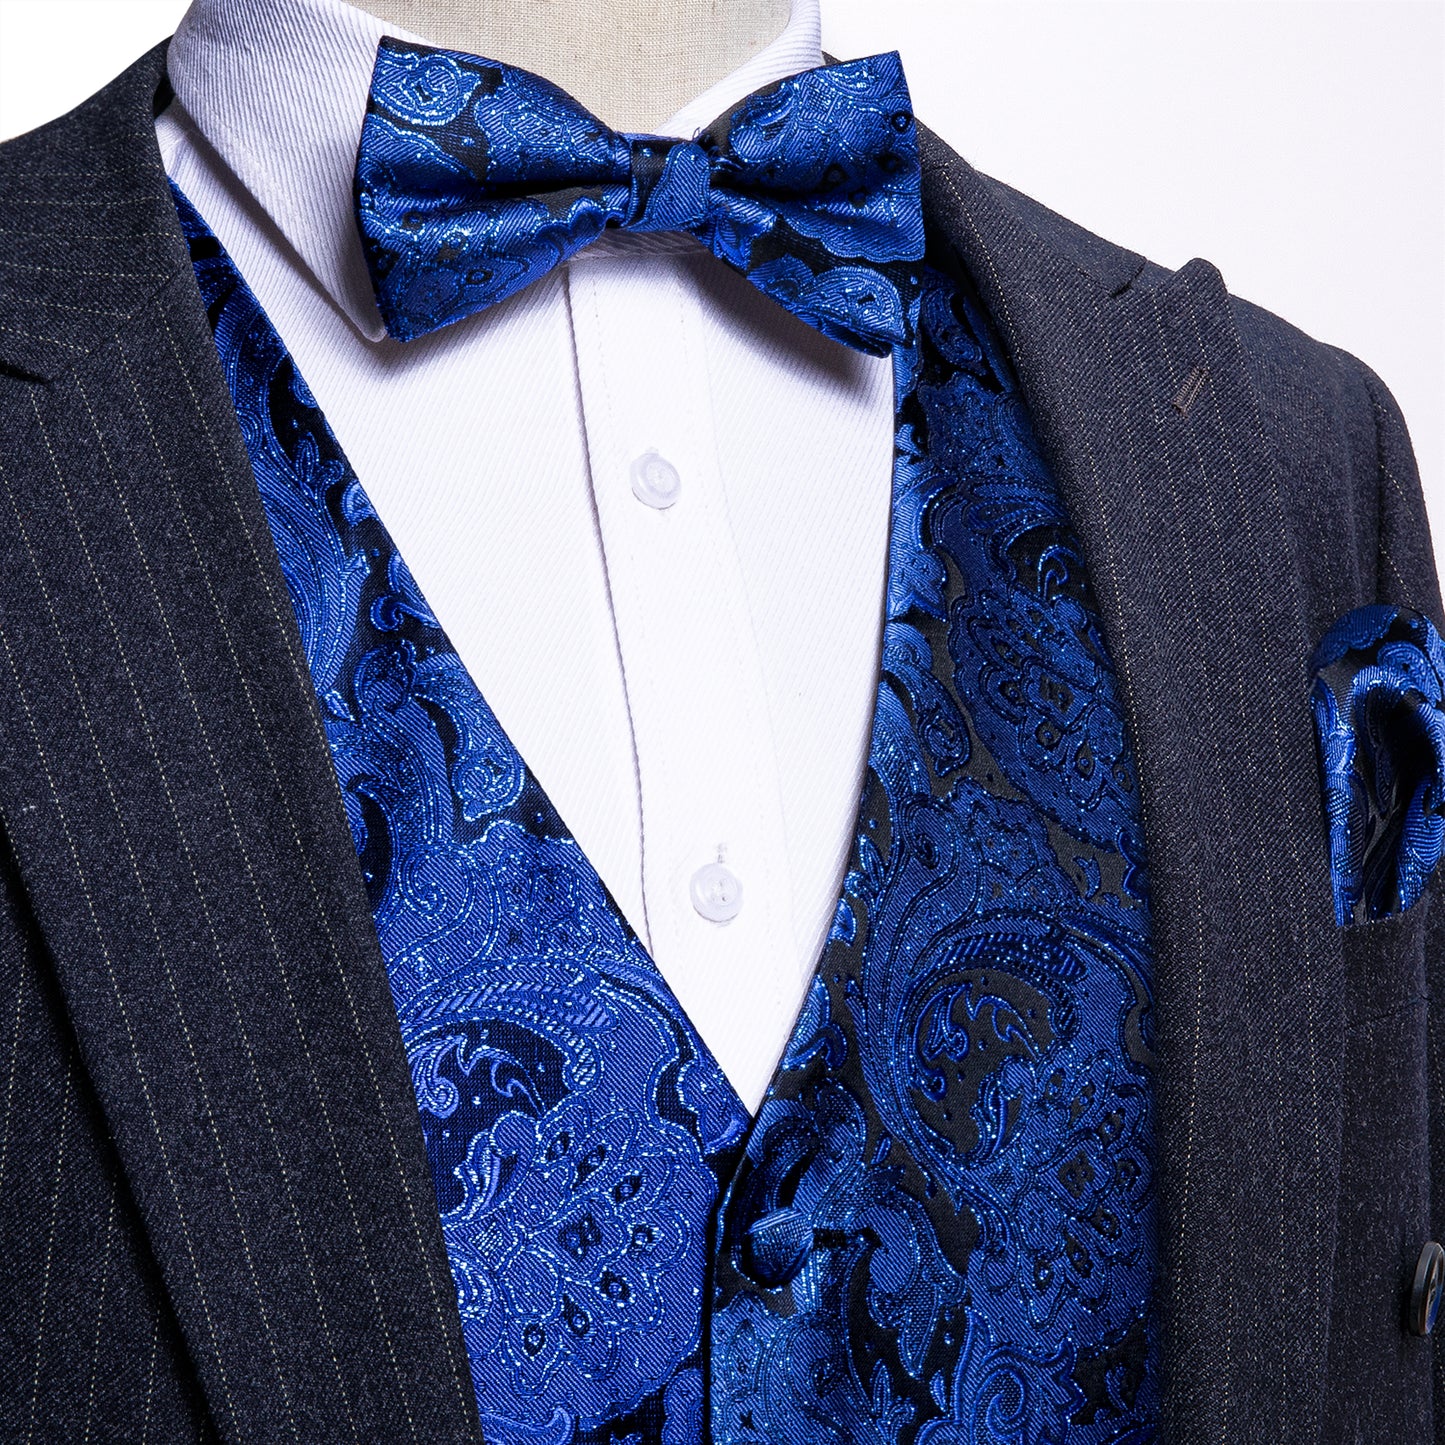 Designer Waistcoat Novelty Bowtie Vest Shiny French Fan Print Royal Blue